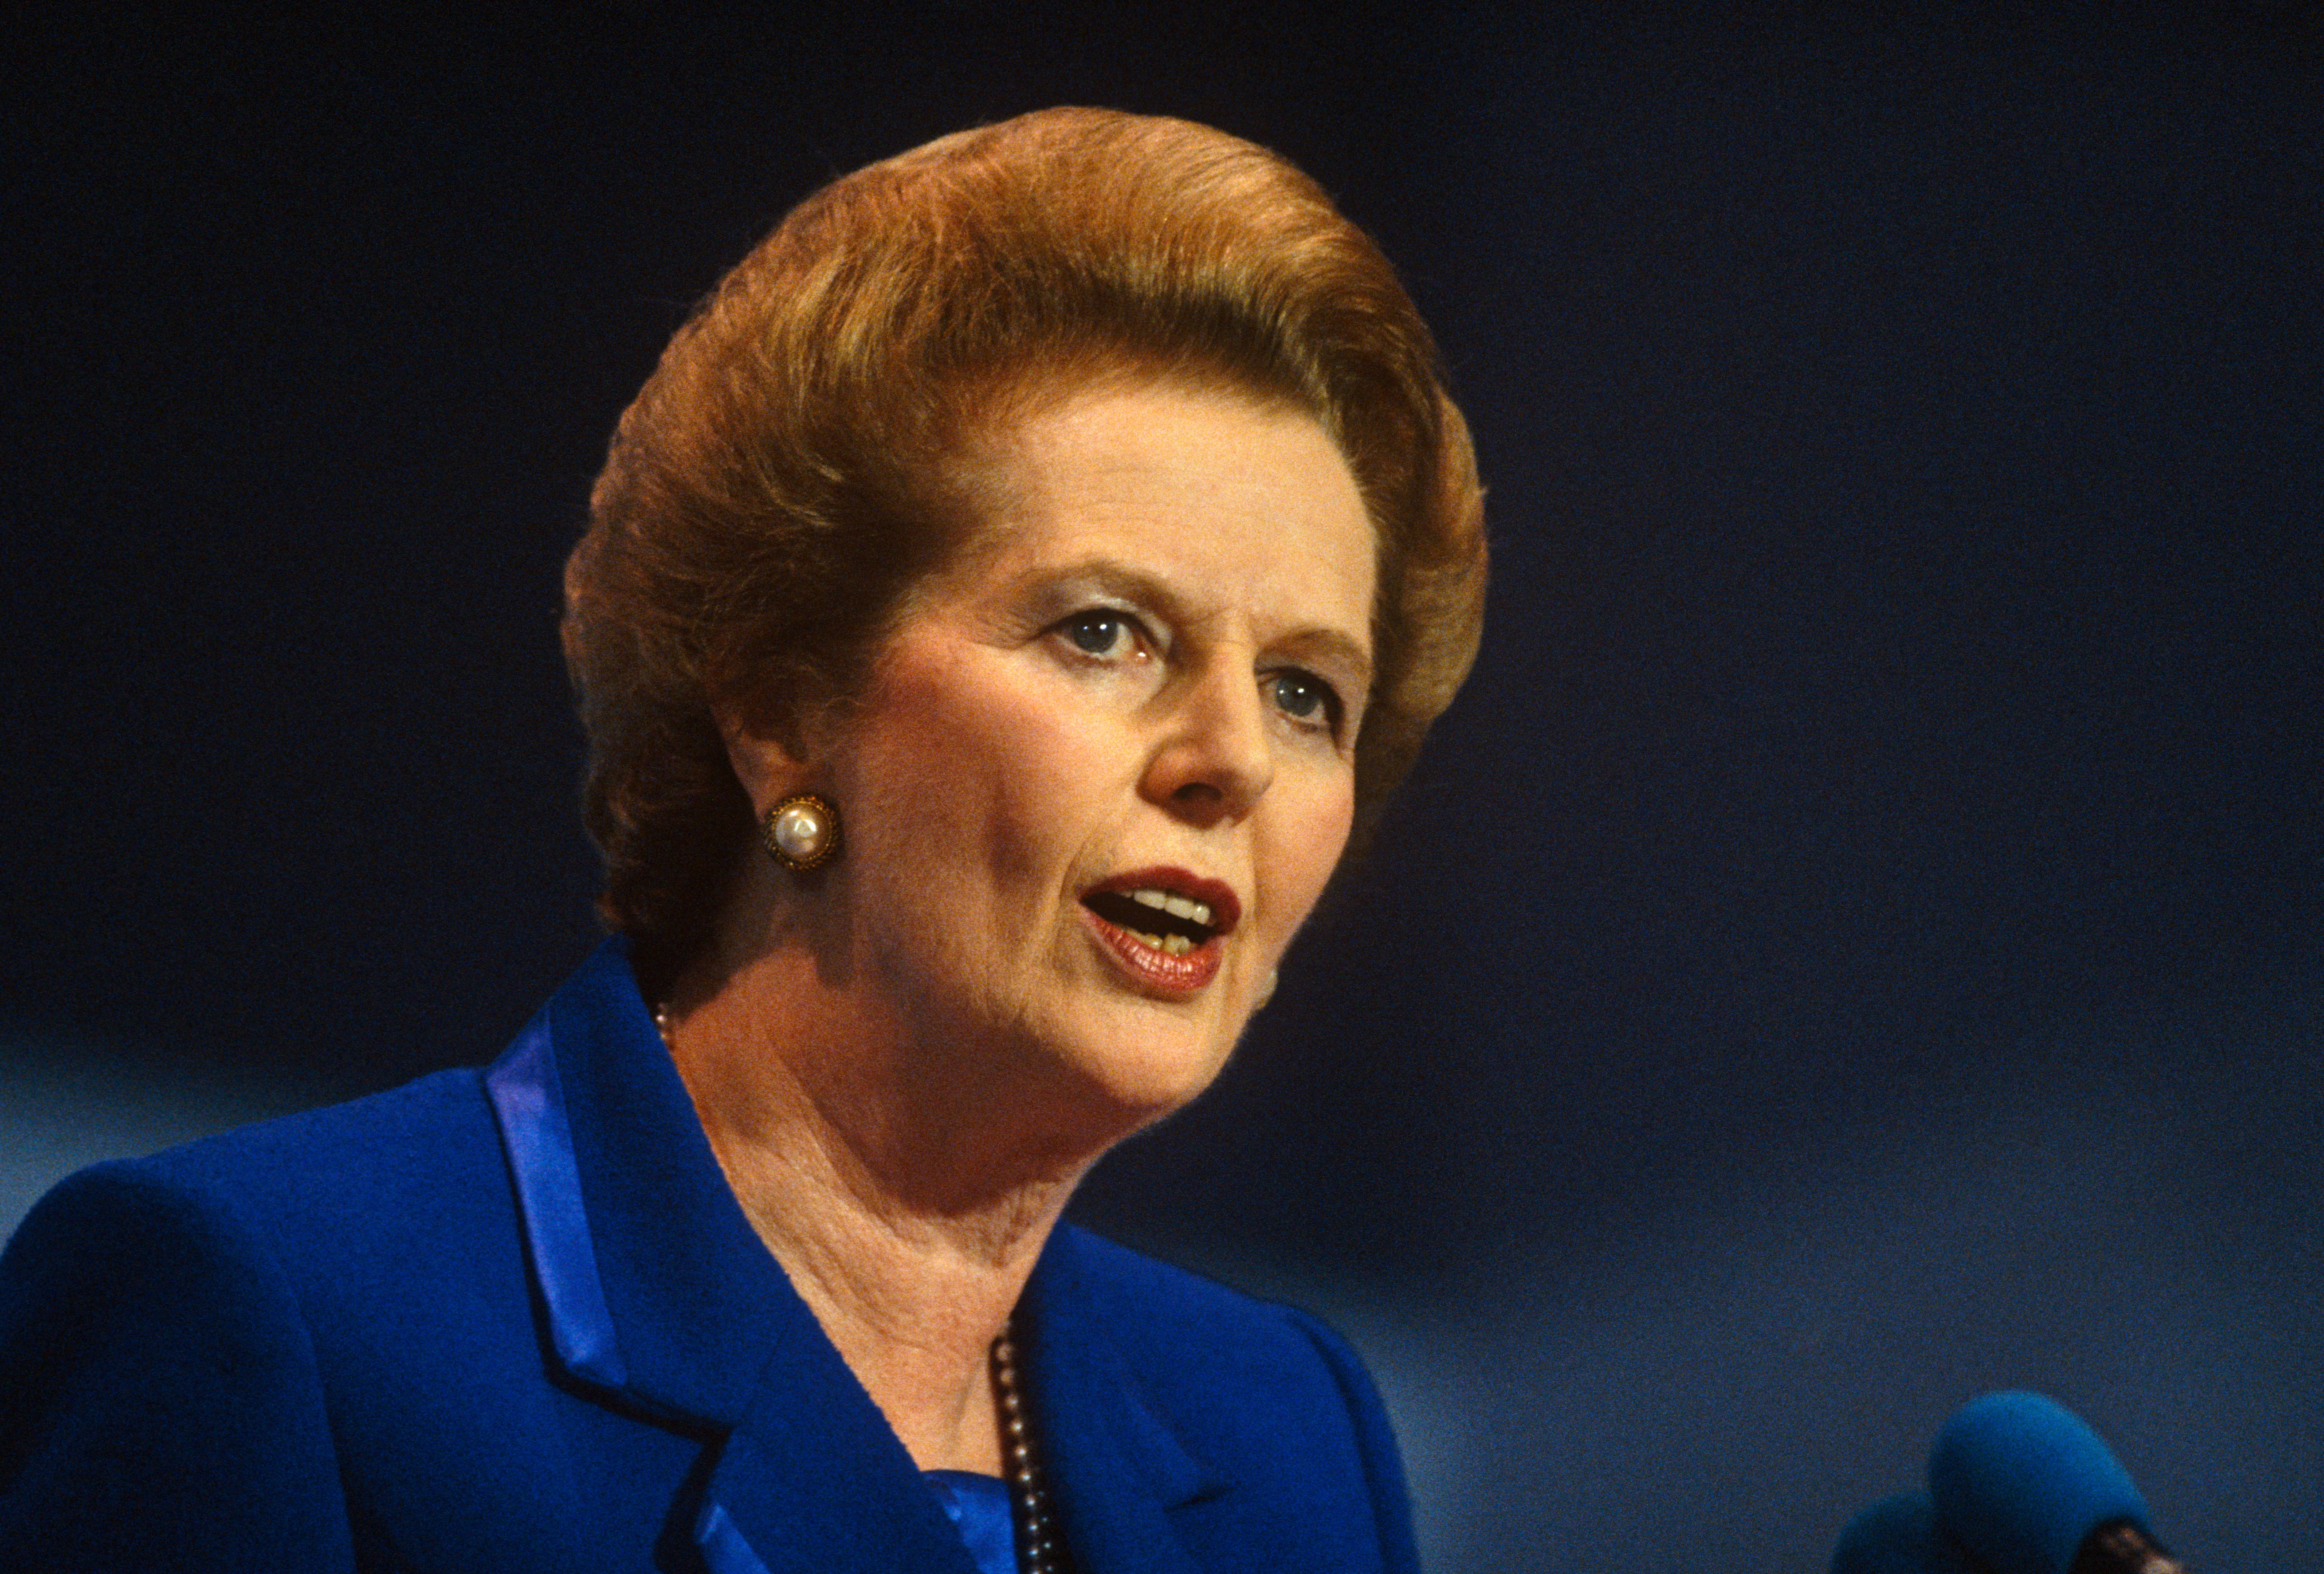 Margaret Thatcher oversaw the deregulation of UK financial markets